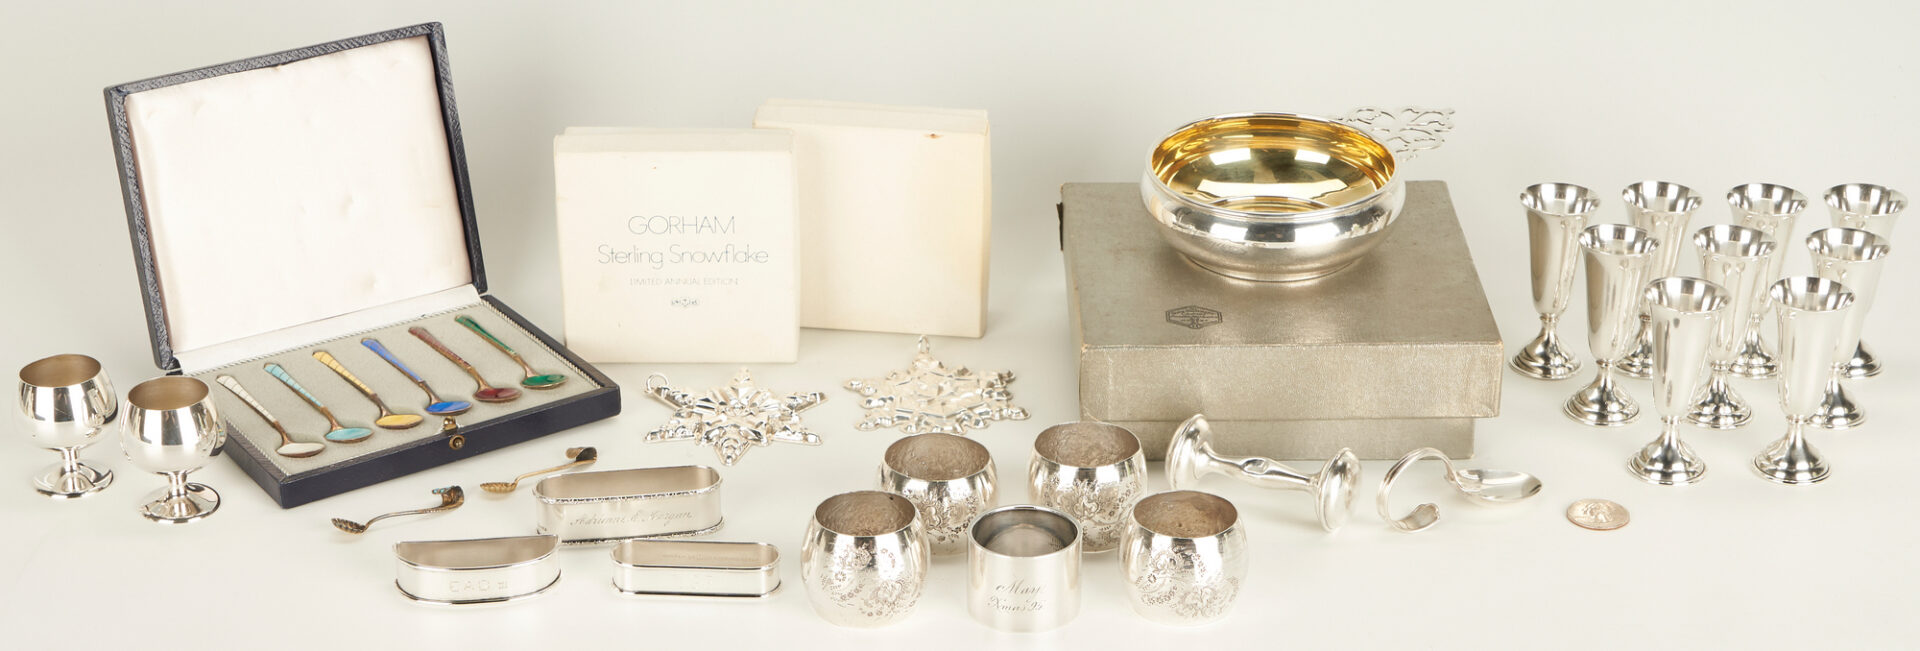 Lot 1134: 32 Pcs. Assd. Silver, incl. Napkin Rings, Ornaments, Danish Spoons